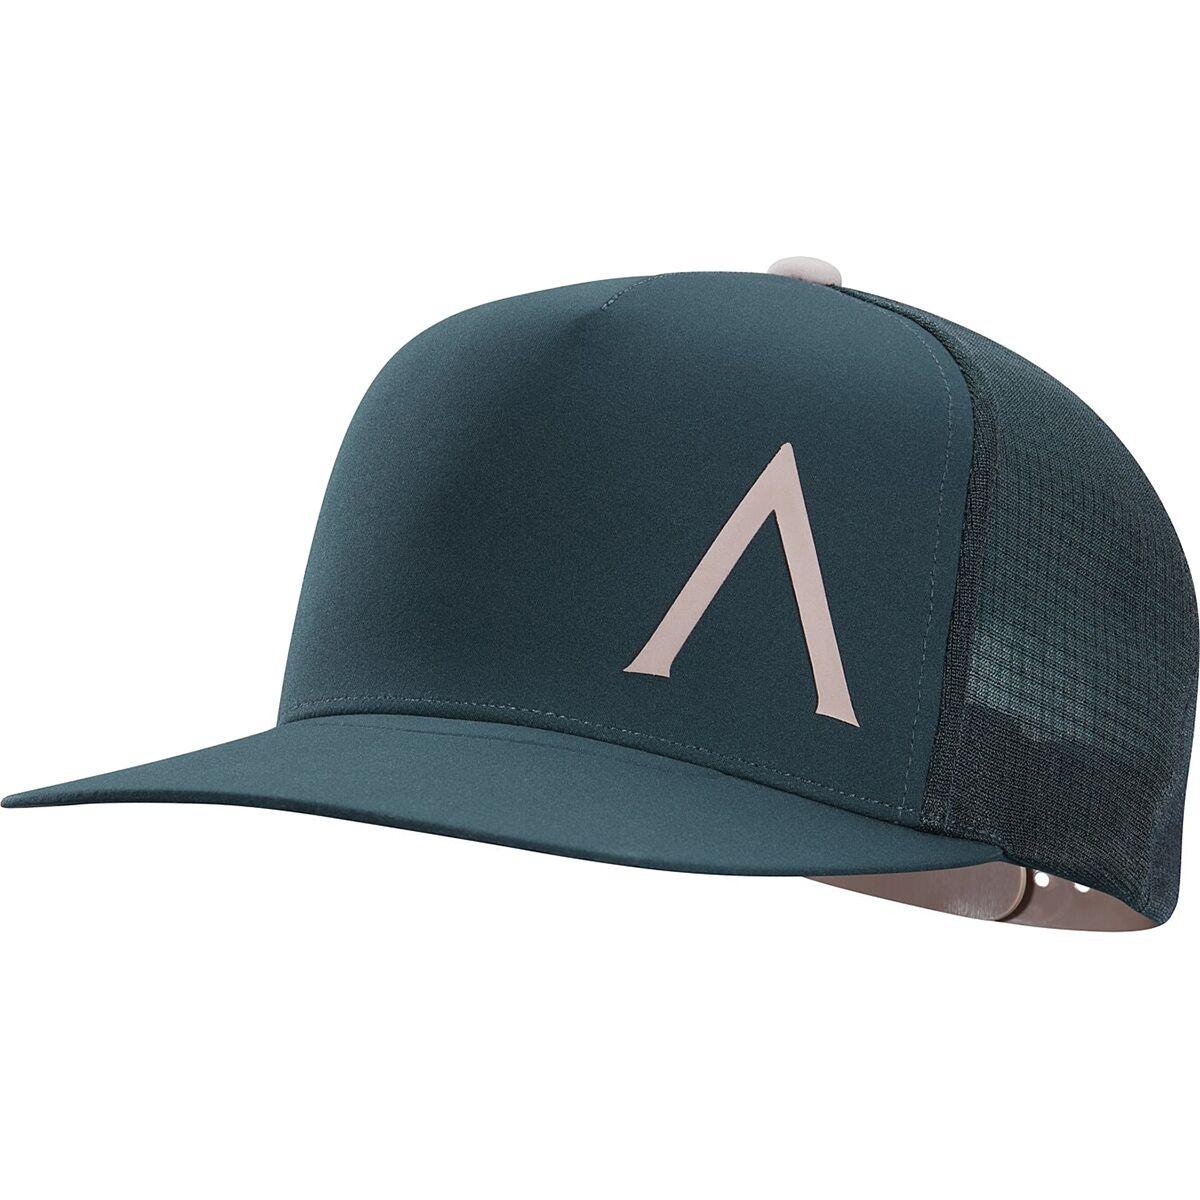 Arc'teryx A-pop Trucker Hat for Men